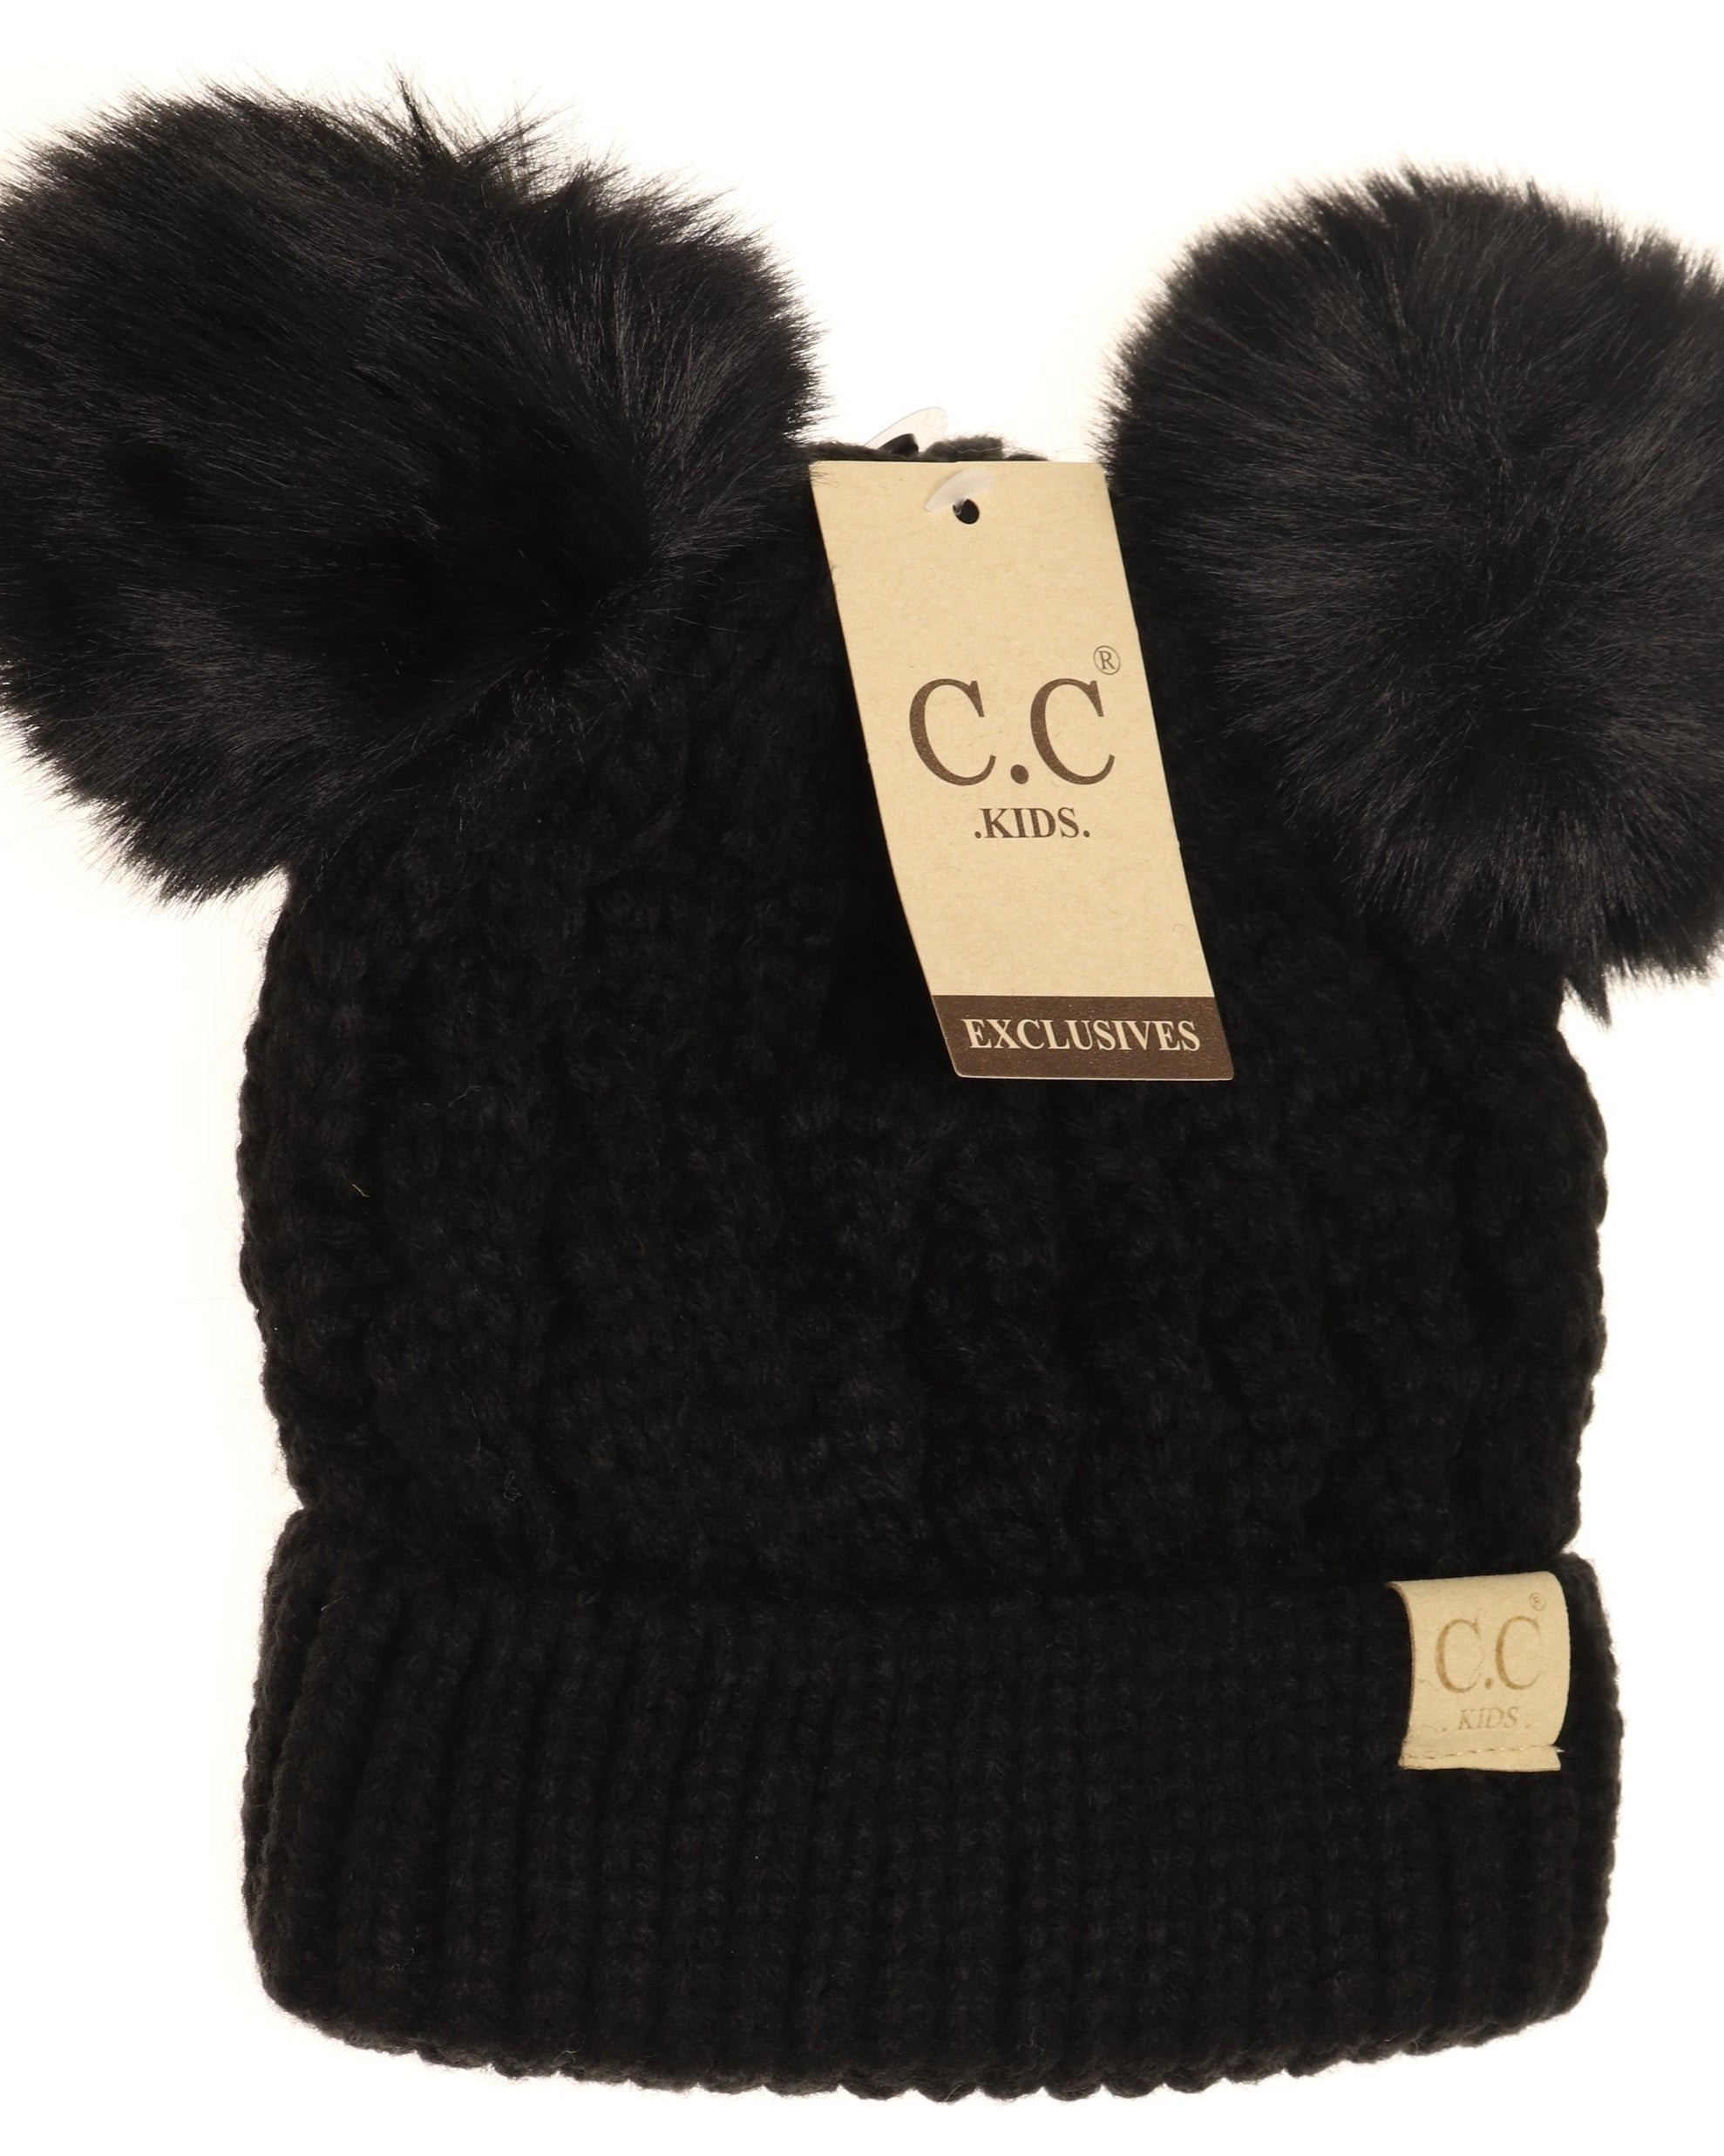 Kids Cable Knit Double Matching Fur Pom CC Hat  A Touch of Magnolia Boutique Black  